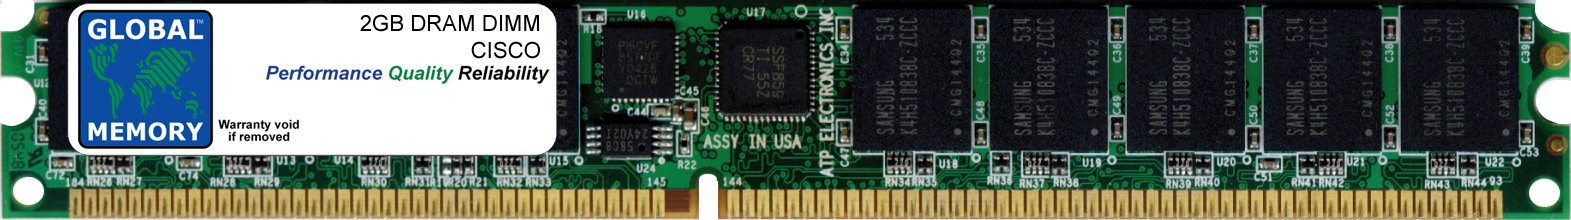 2GB DRAM DIMM MEMORY RAM FOR CISCO 3925 / 3945 ROUTERS (MEM-3900-2GB)